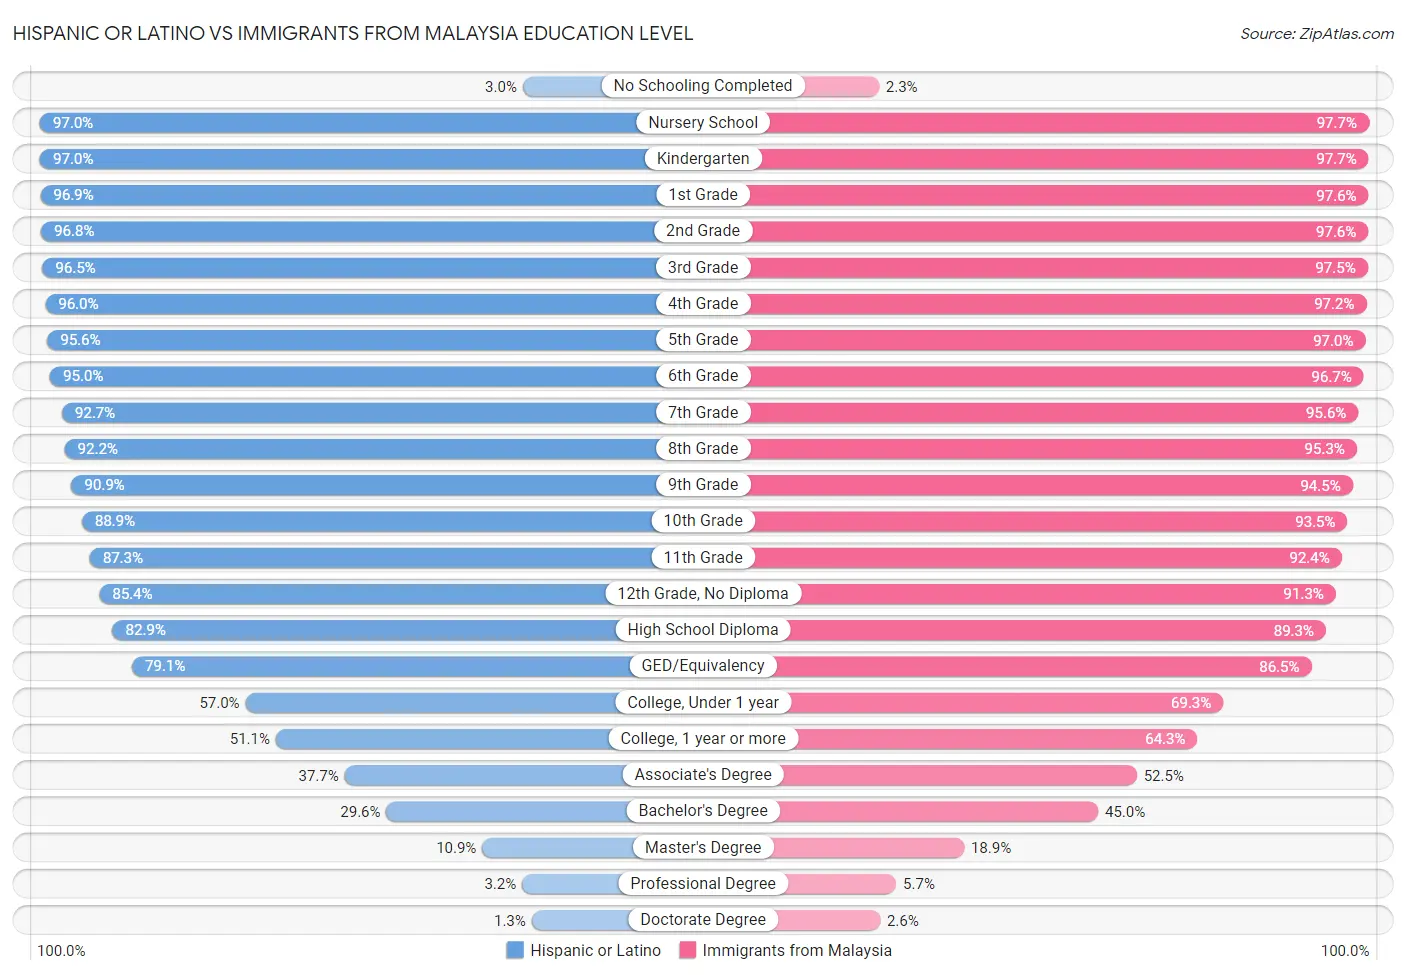 Hispanic or Latino vs Immigrants from Malaysia Education Level